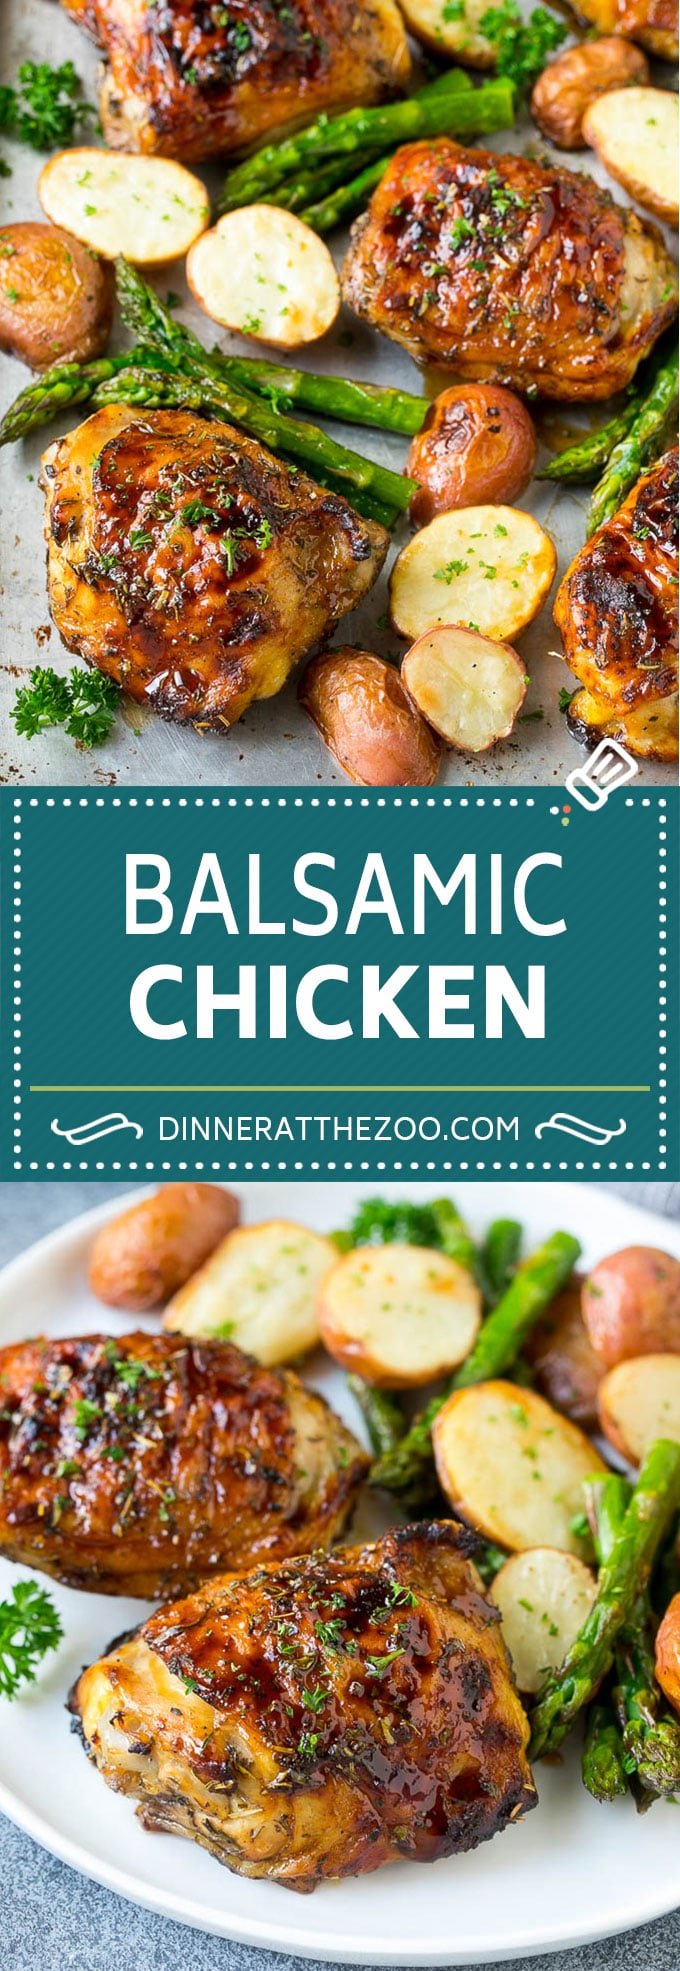 Balsamic Chicken Recipe | Sheet Pan Chicken | Glazed Chicken #chicken #asparagus #potatoes #dinner #glutenfree #dinneratthezoo